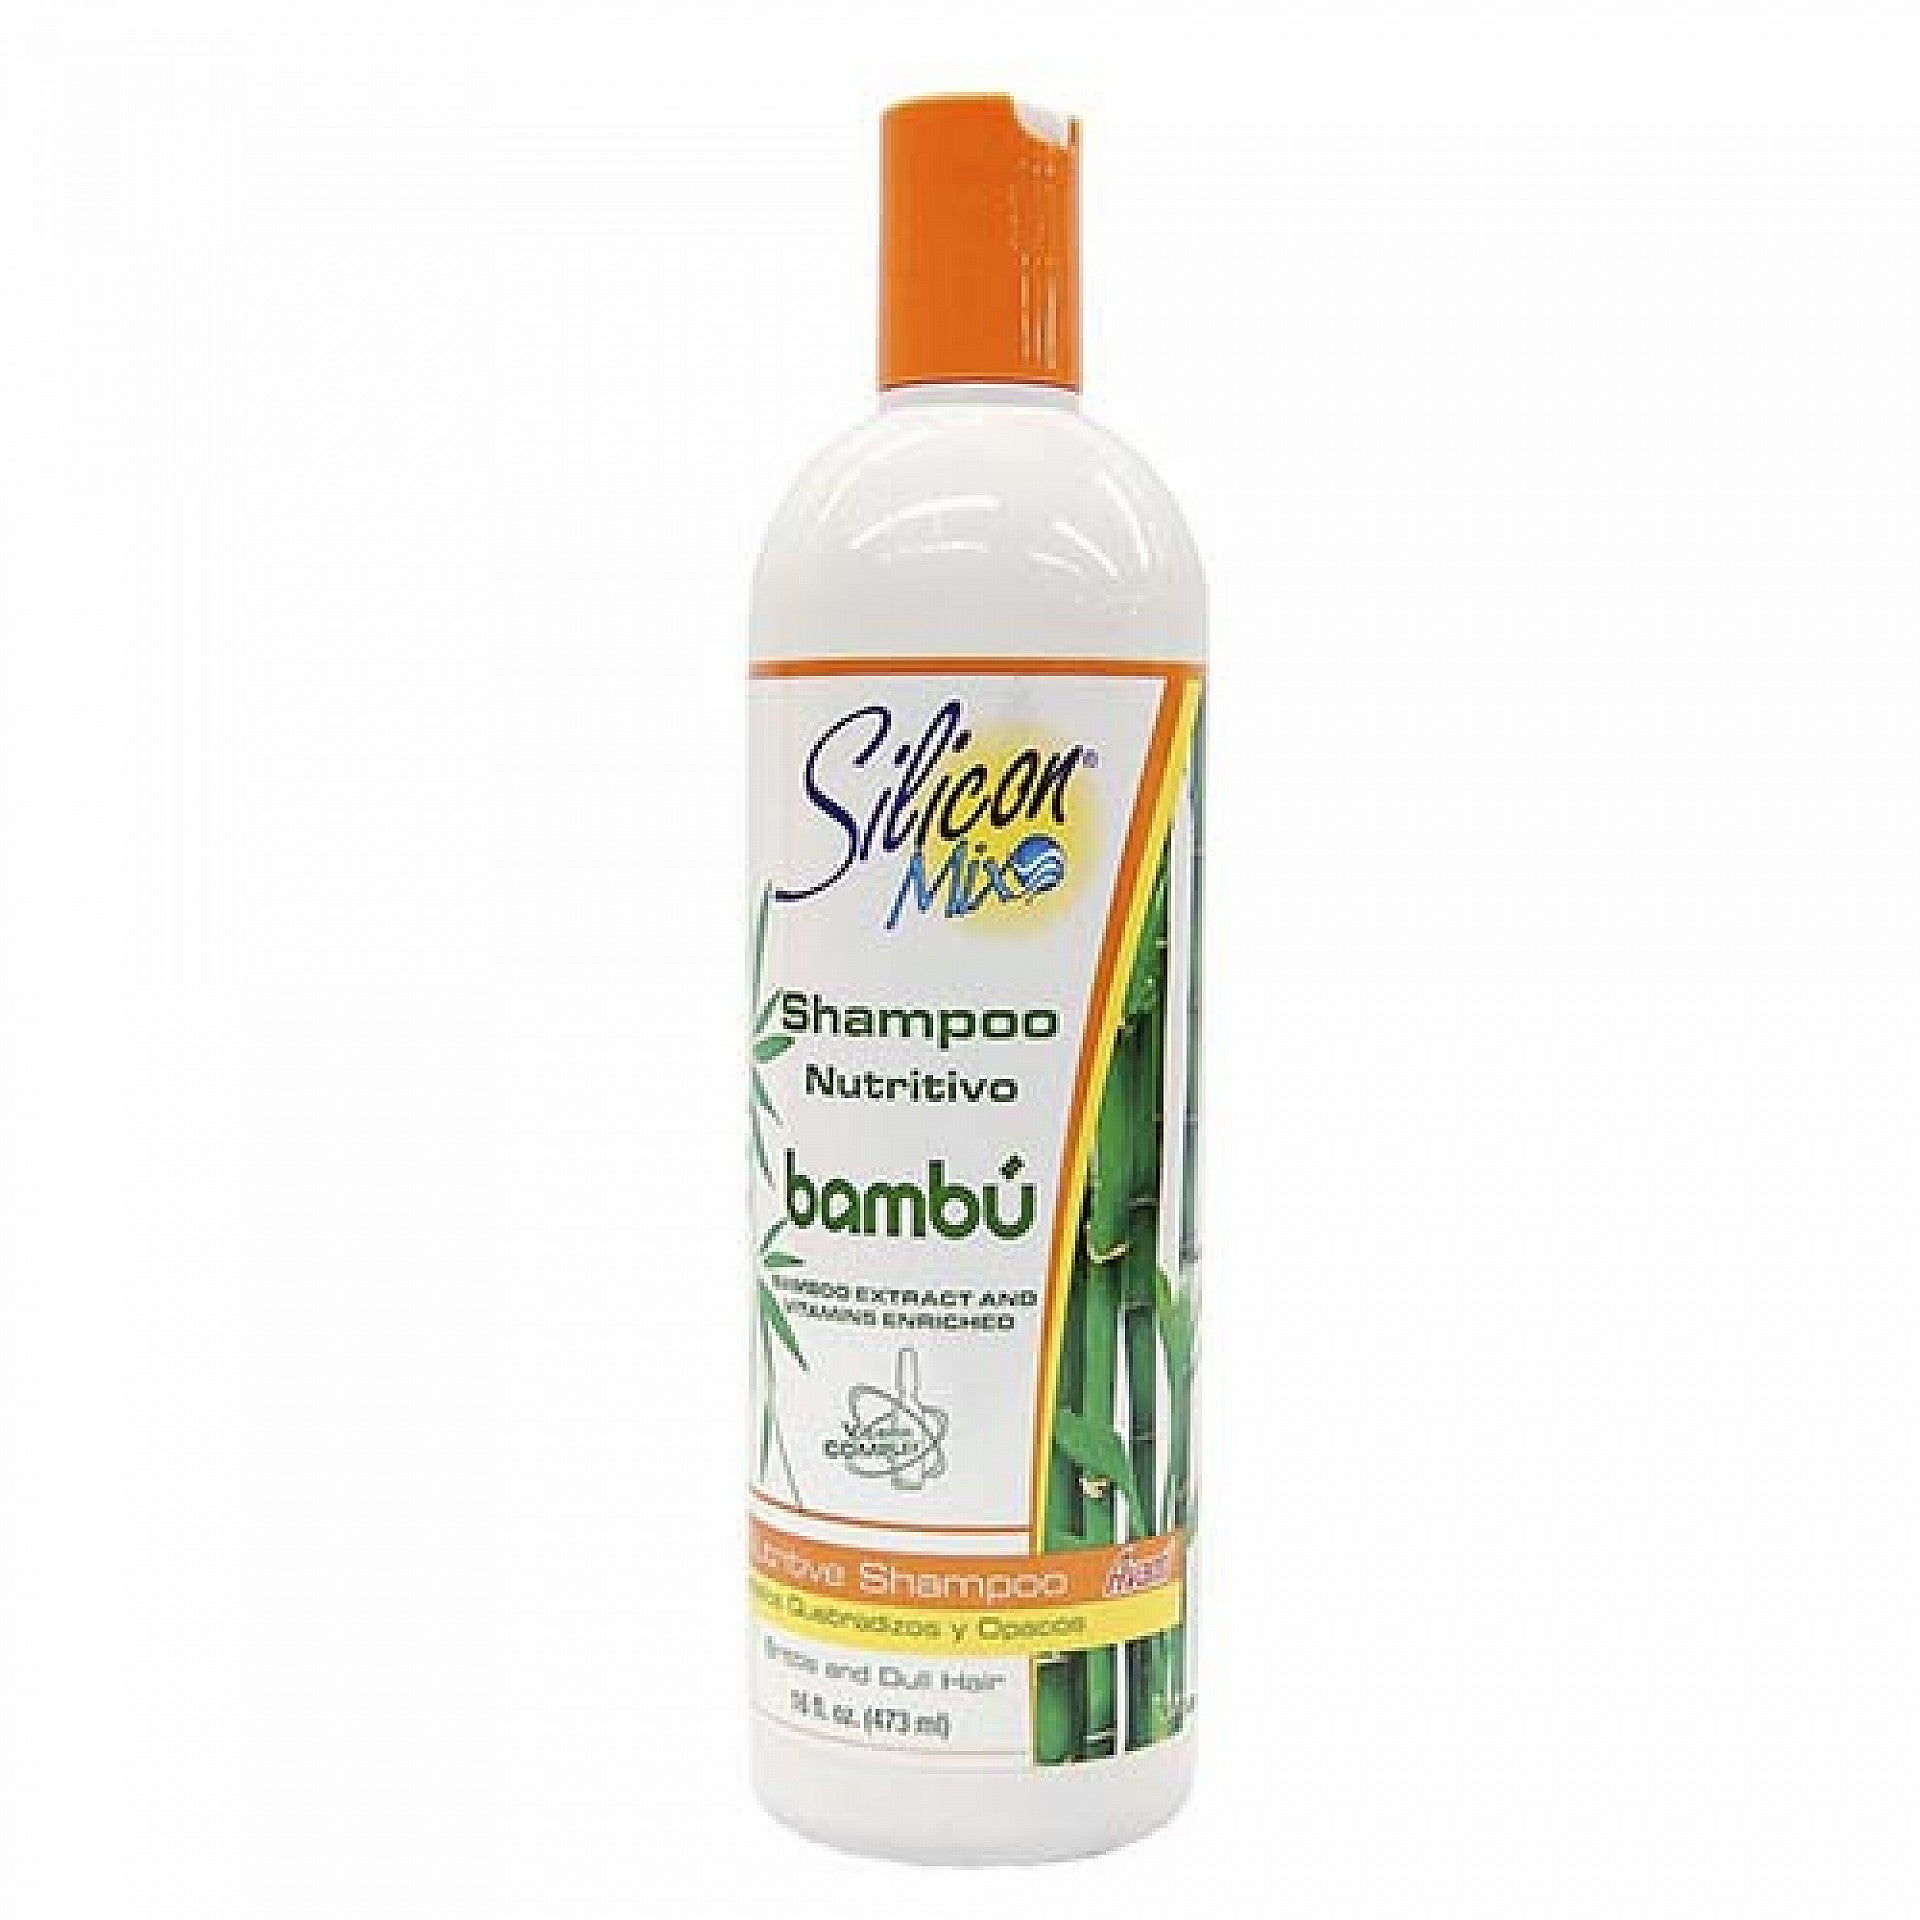 Silicon Mix Shampoo Nutrivio Bambú 16 fl.oz